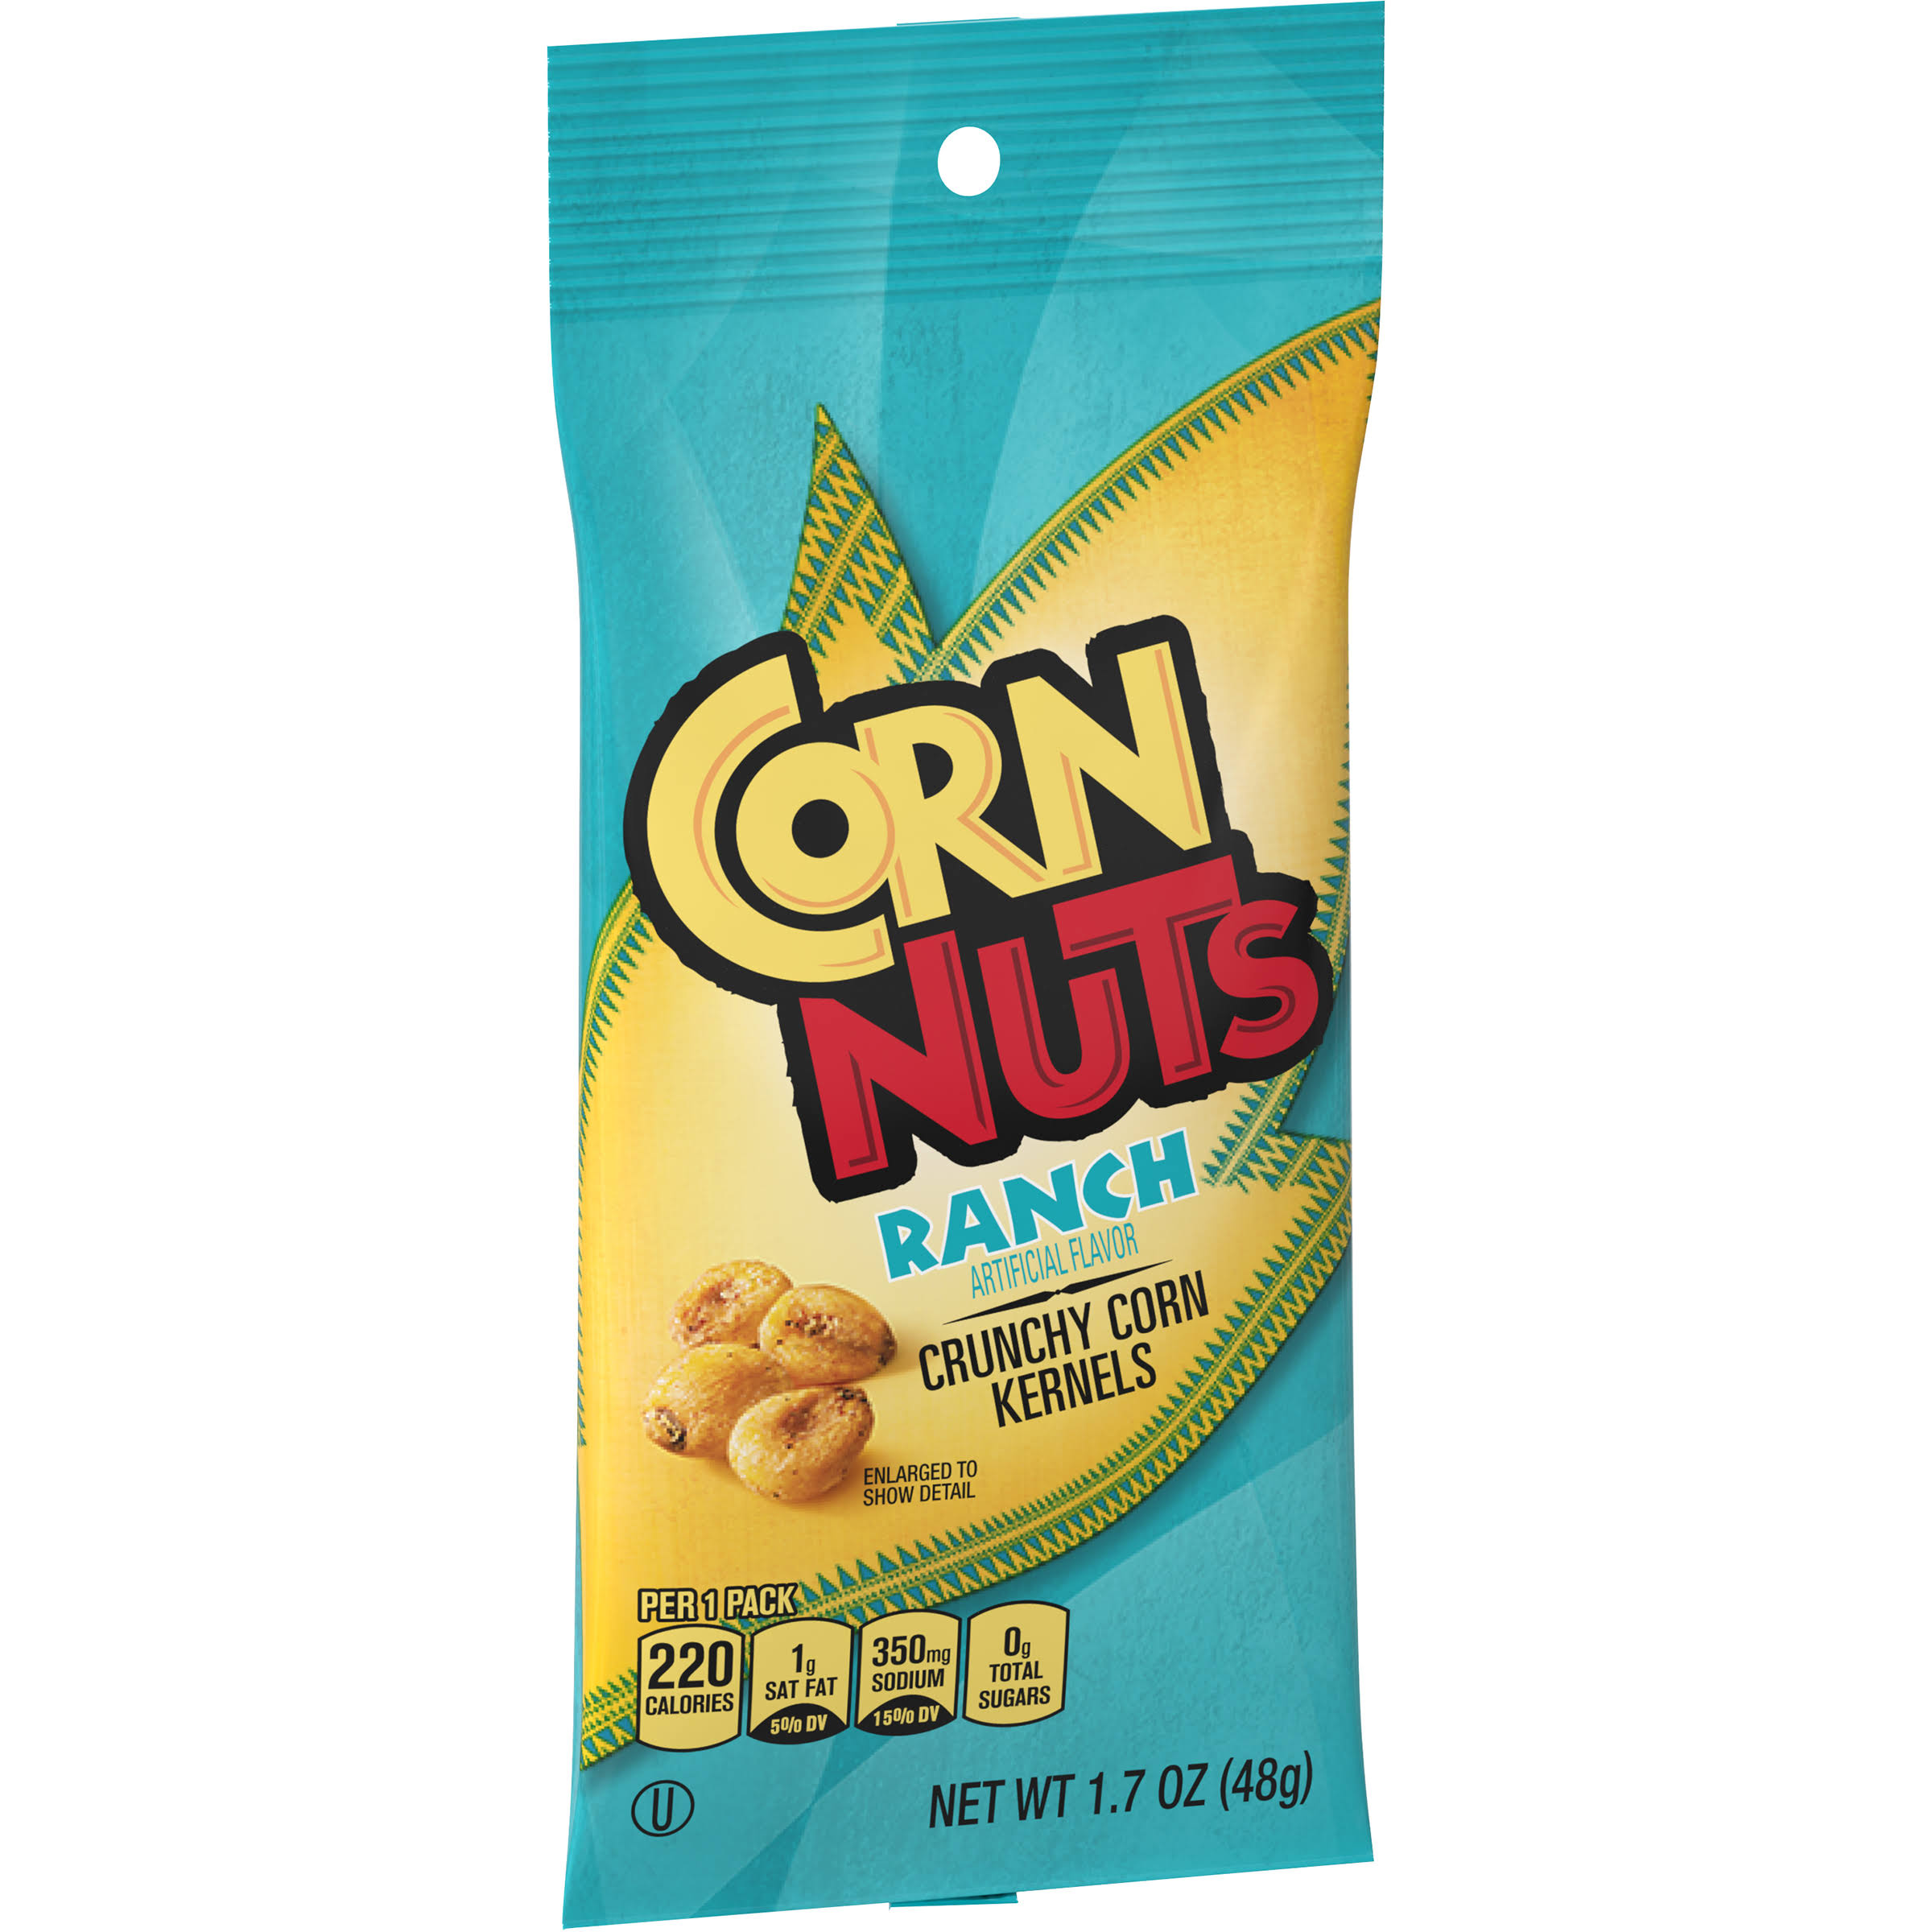 Cornnuts Crunchy Corn Kernels - Ranch Flavored